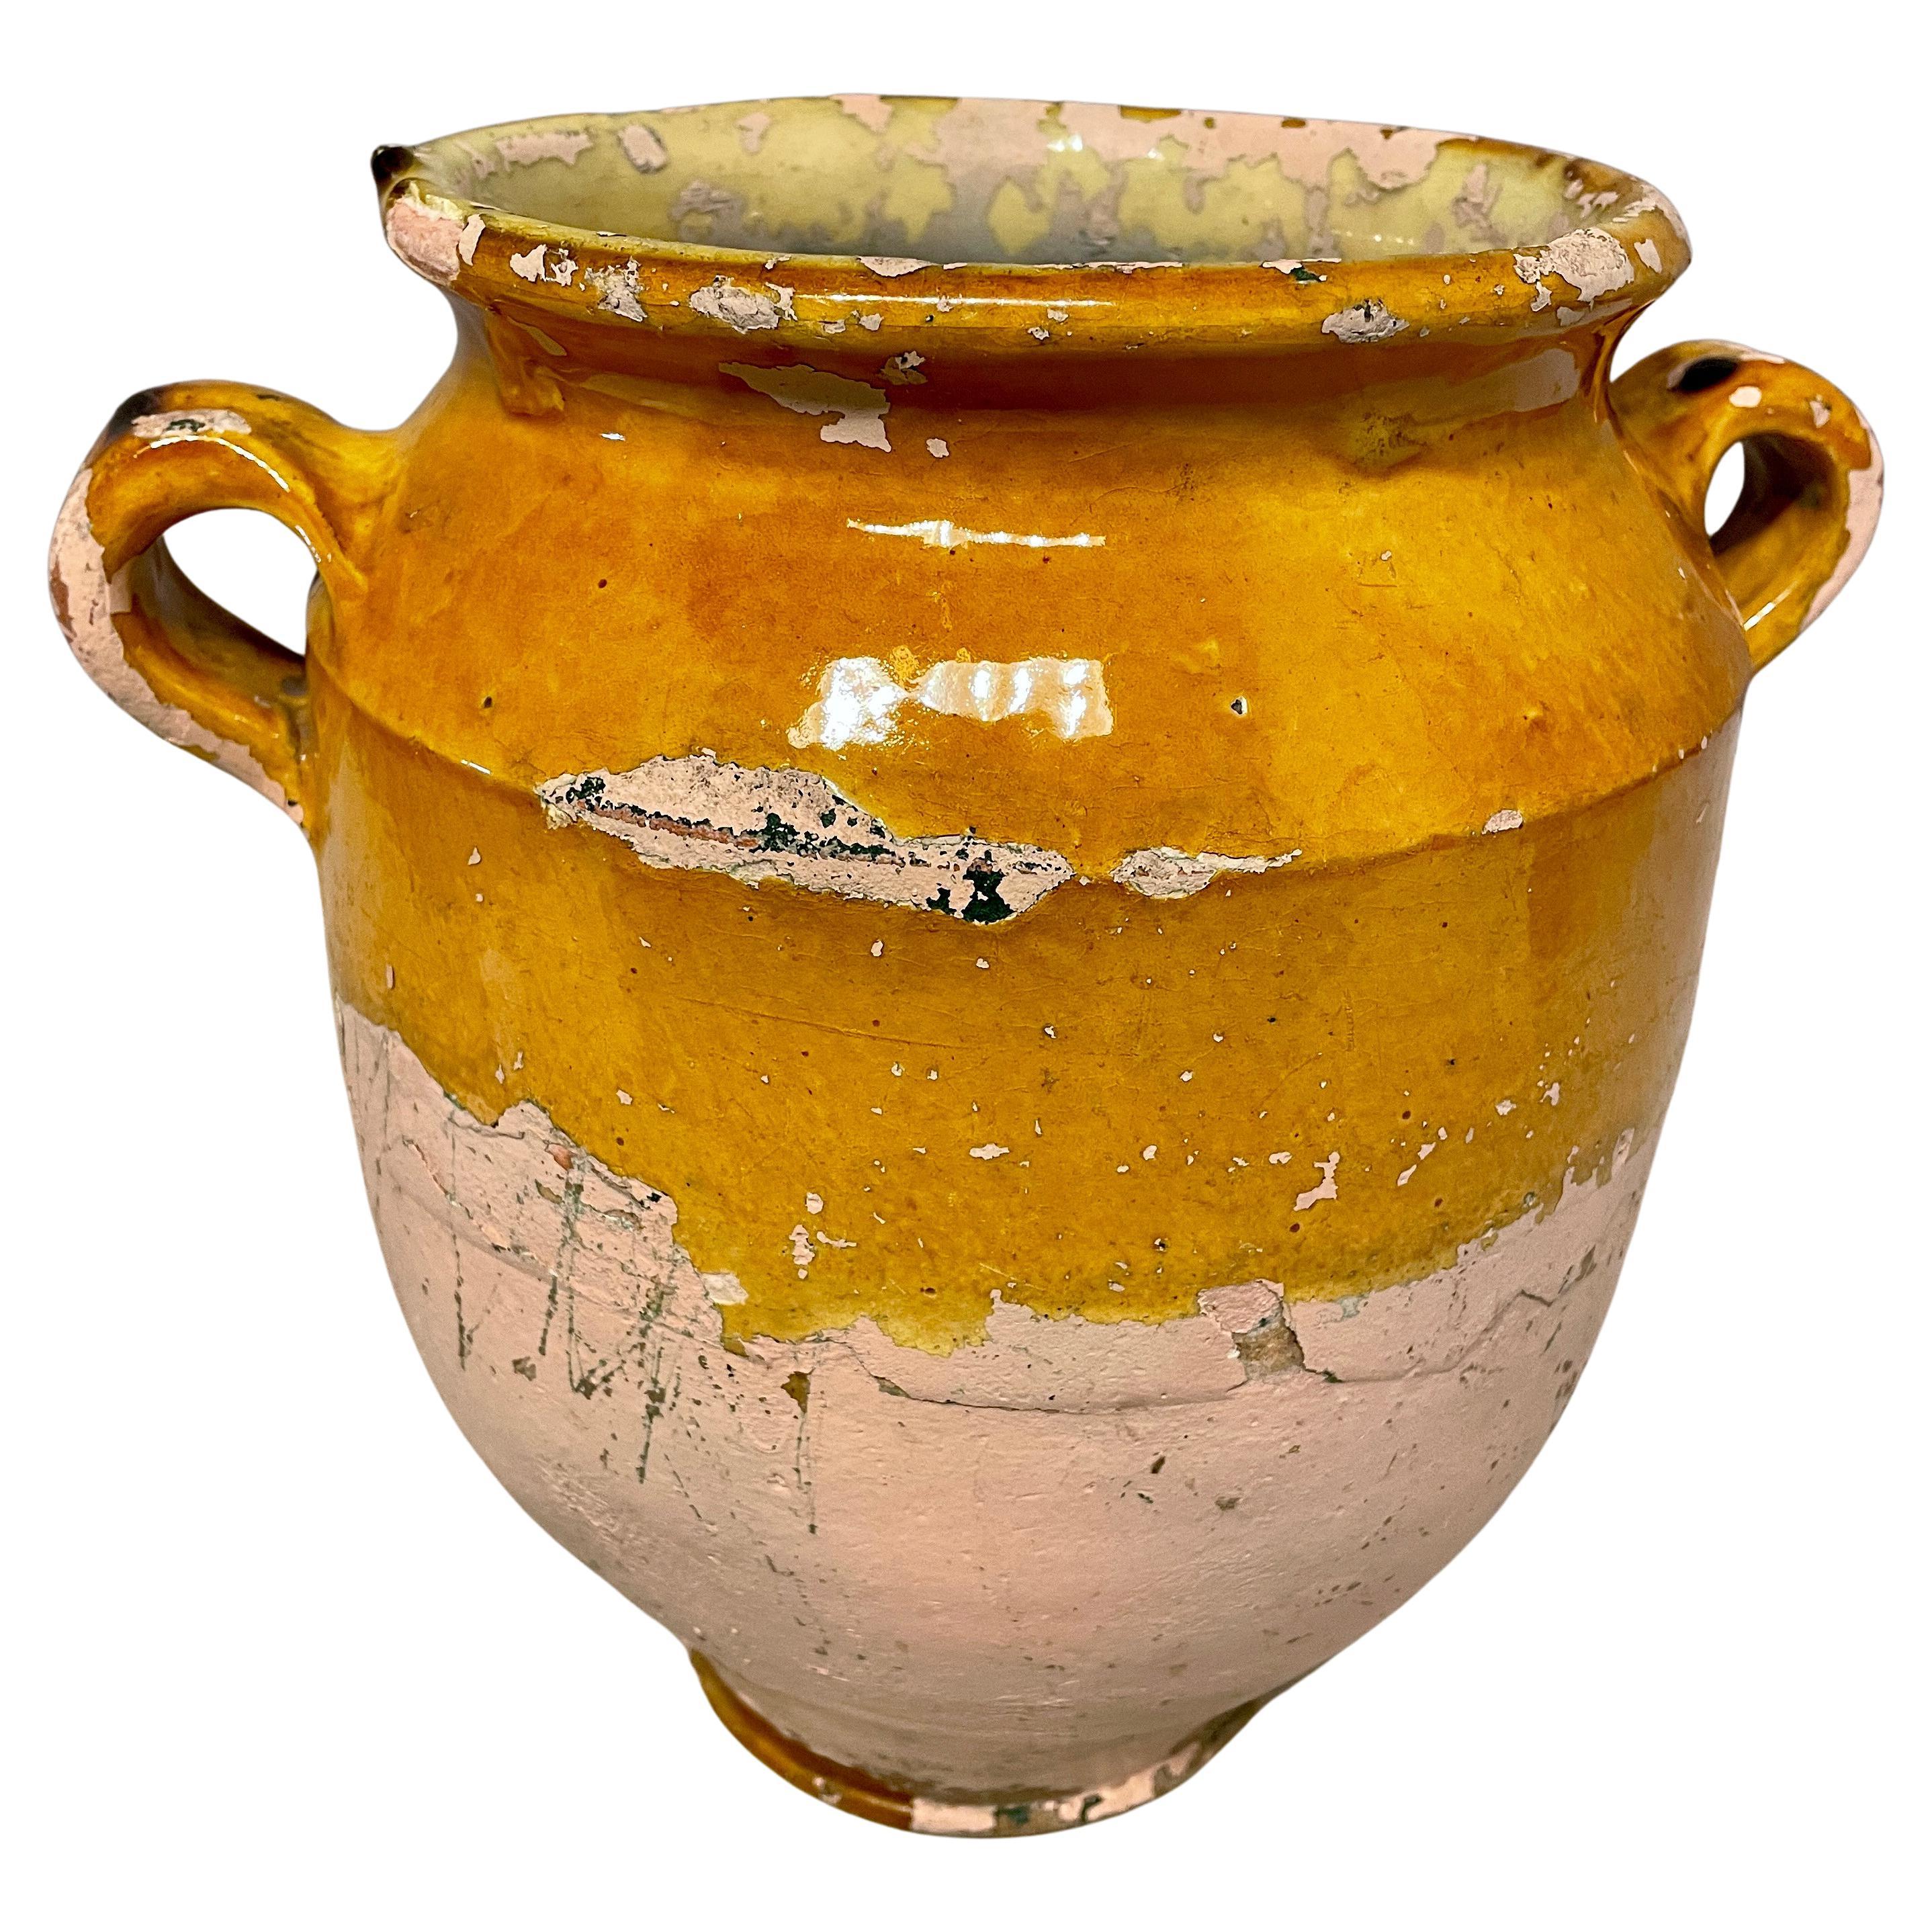 19th c. French Terracotta Confit Pot